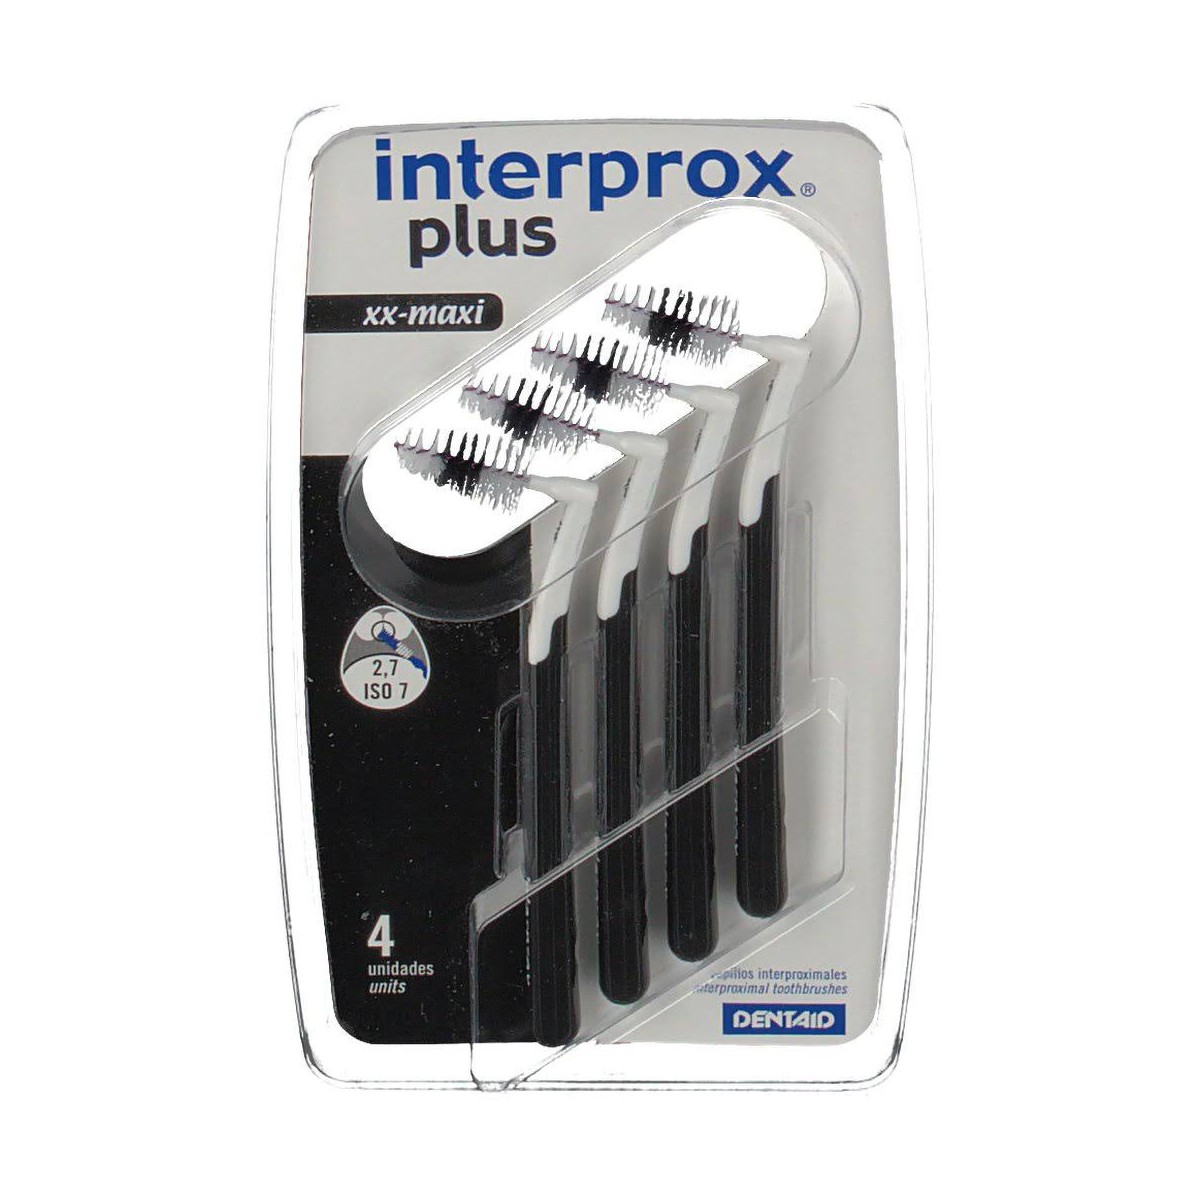 Interprox Plus 2G XX-Maxi 4 unidades